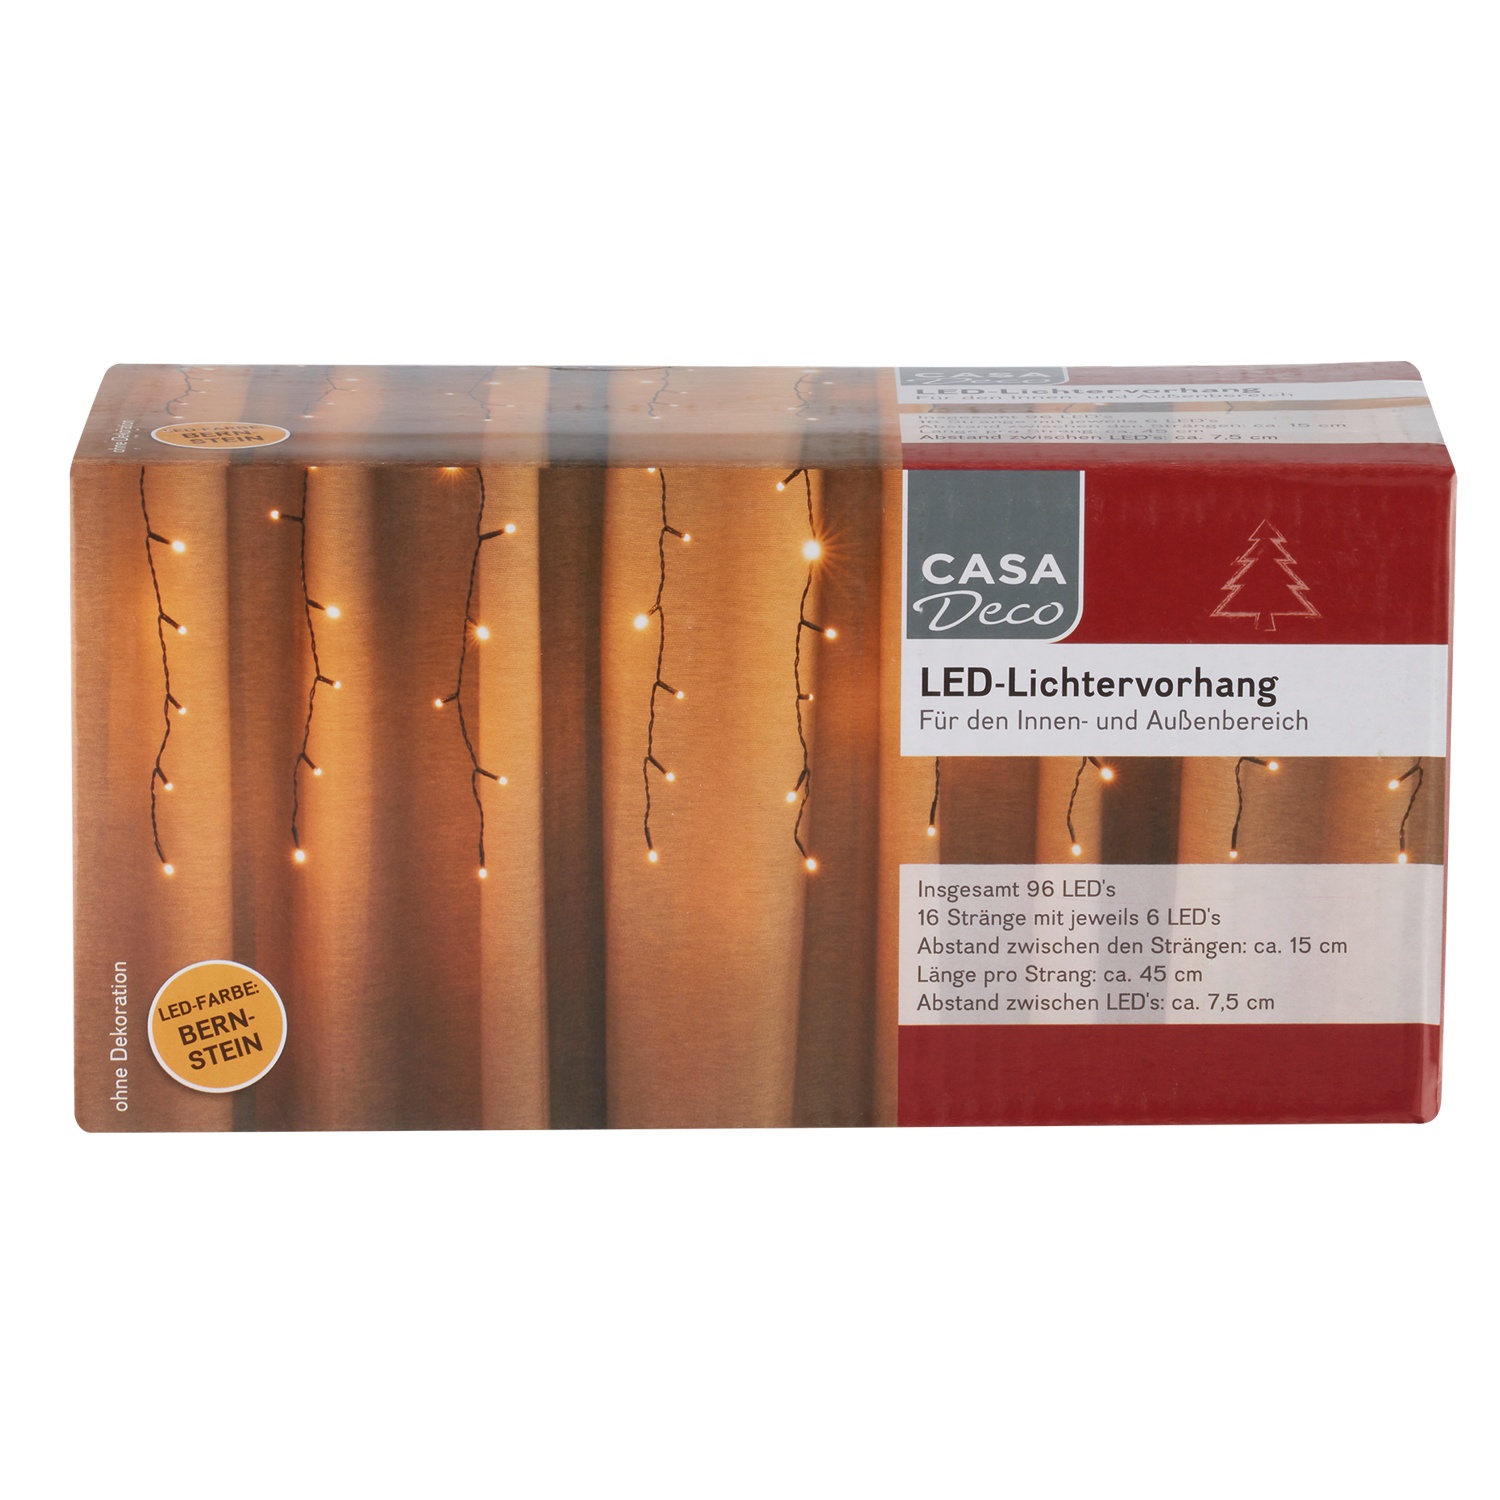 CASA Deco LED-Lichternetz/-vorhang